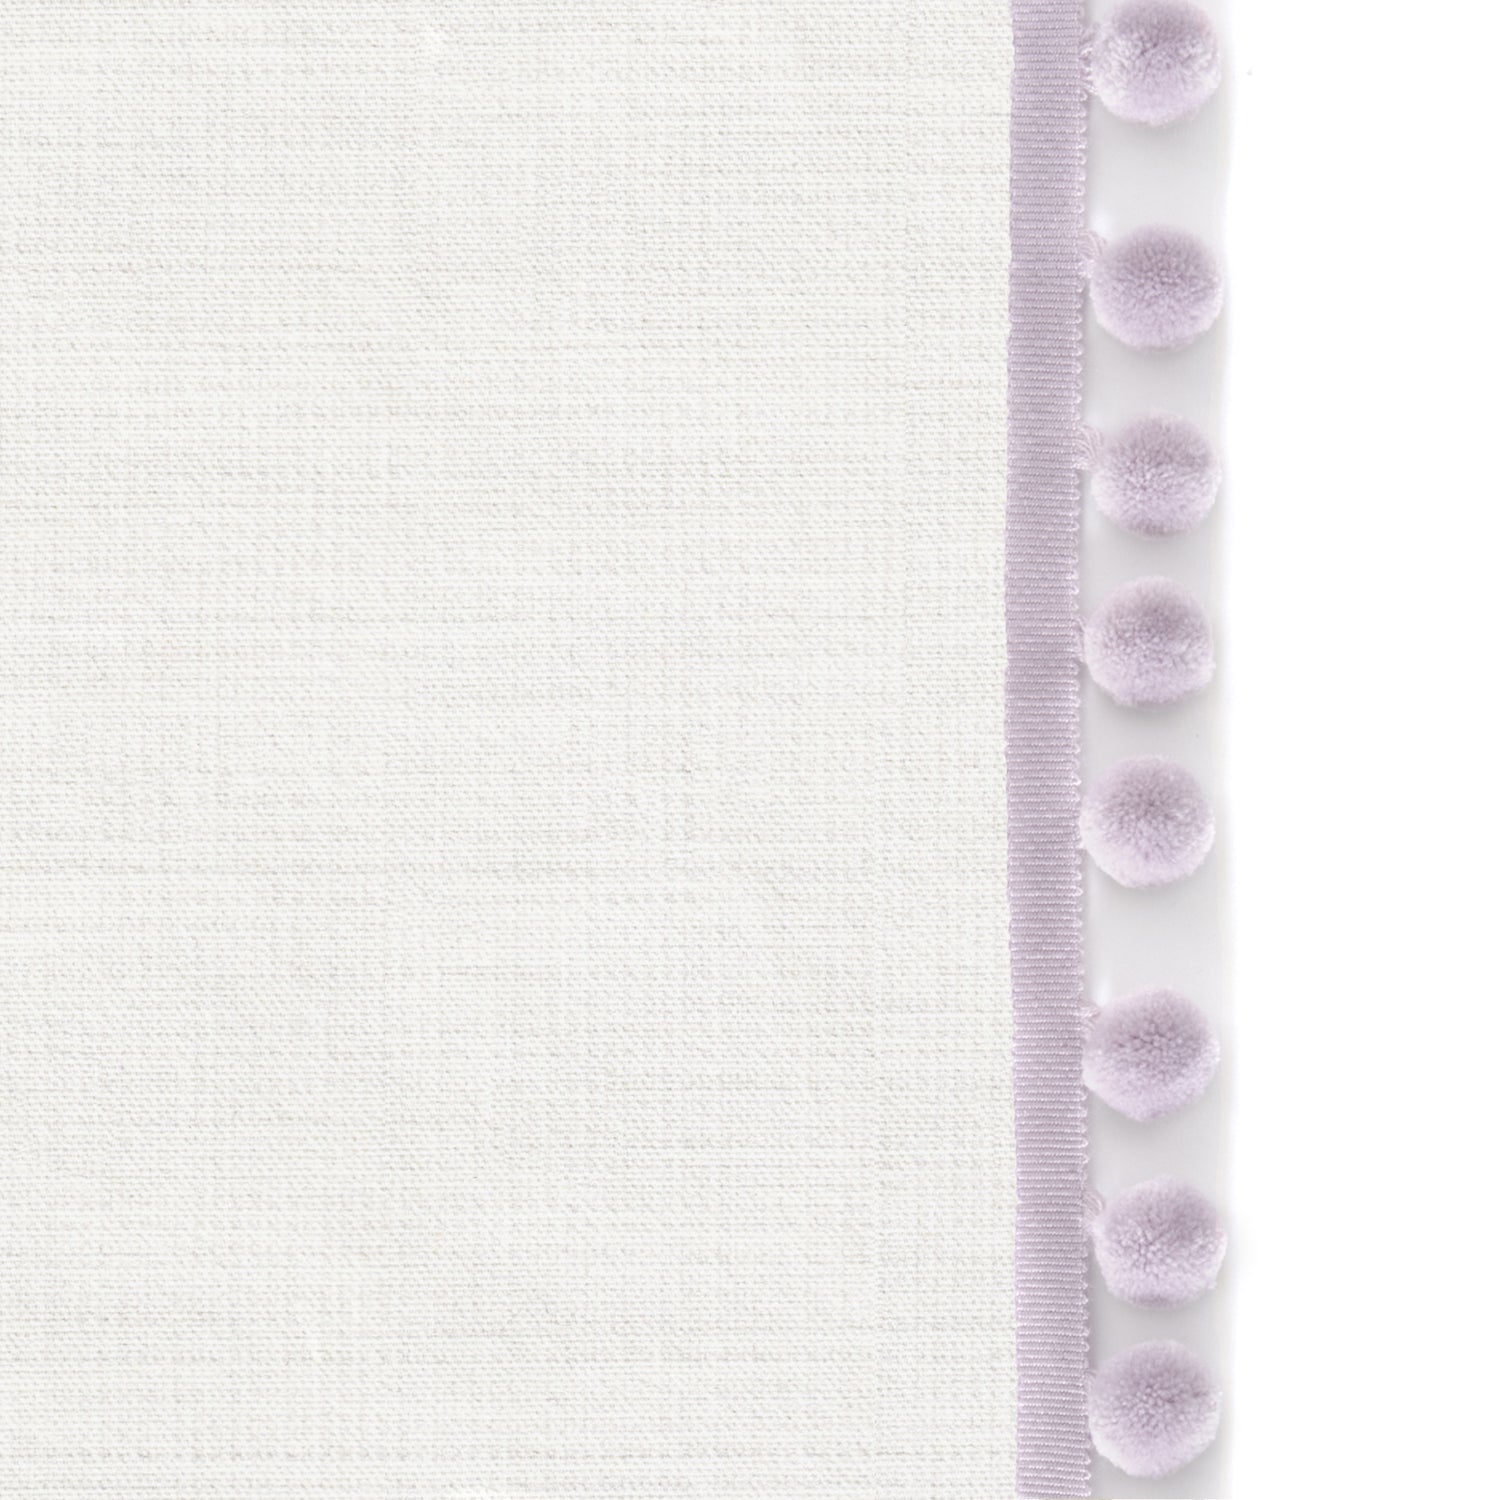 Upclose picture of Snow custom Whitecurtain with lilac pom pom trim